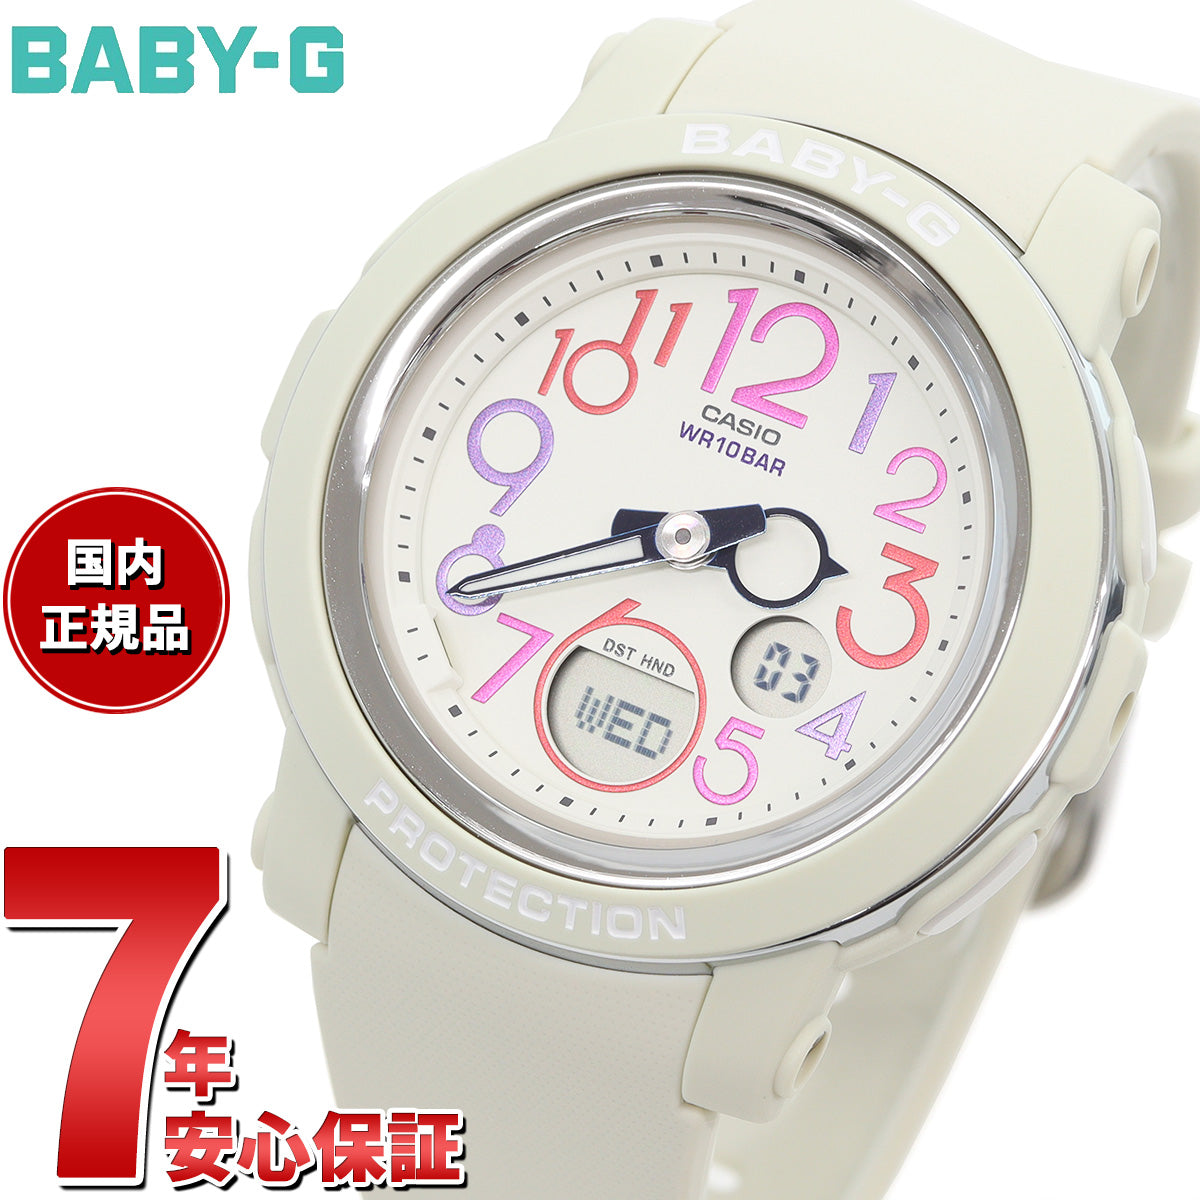 BABY-G カシオ ベビーG レディース 腕時計 BGA-290PA-7AJF